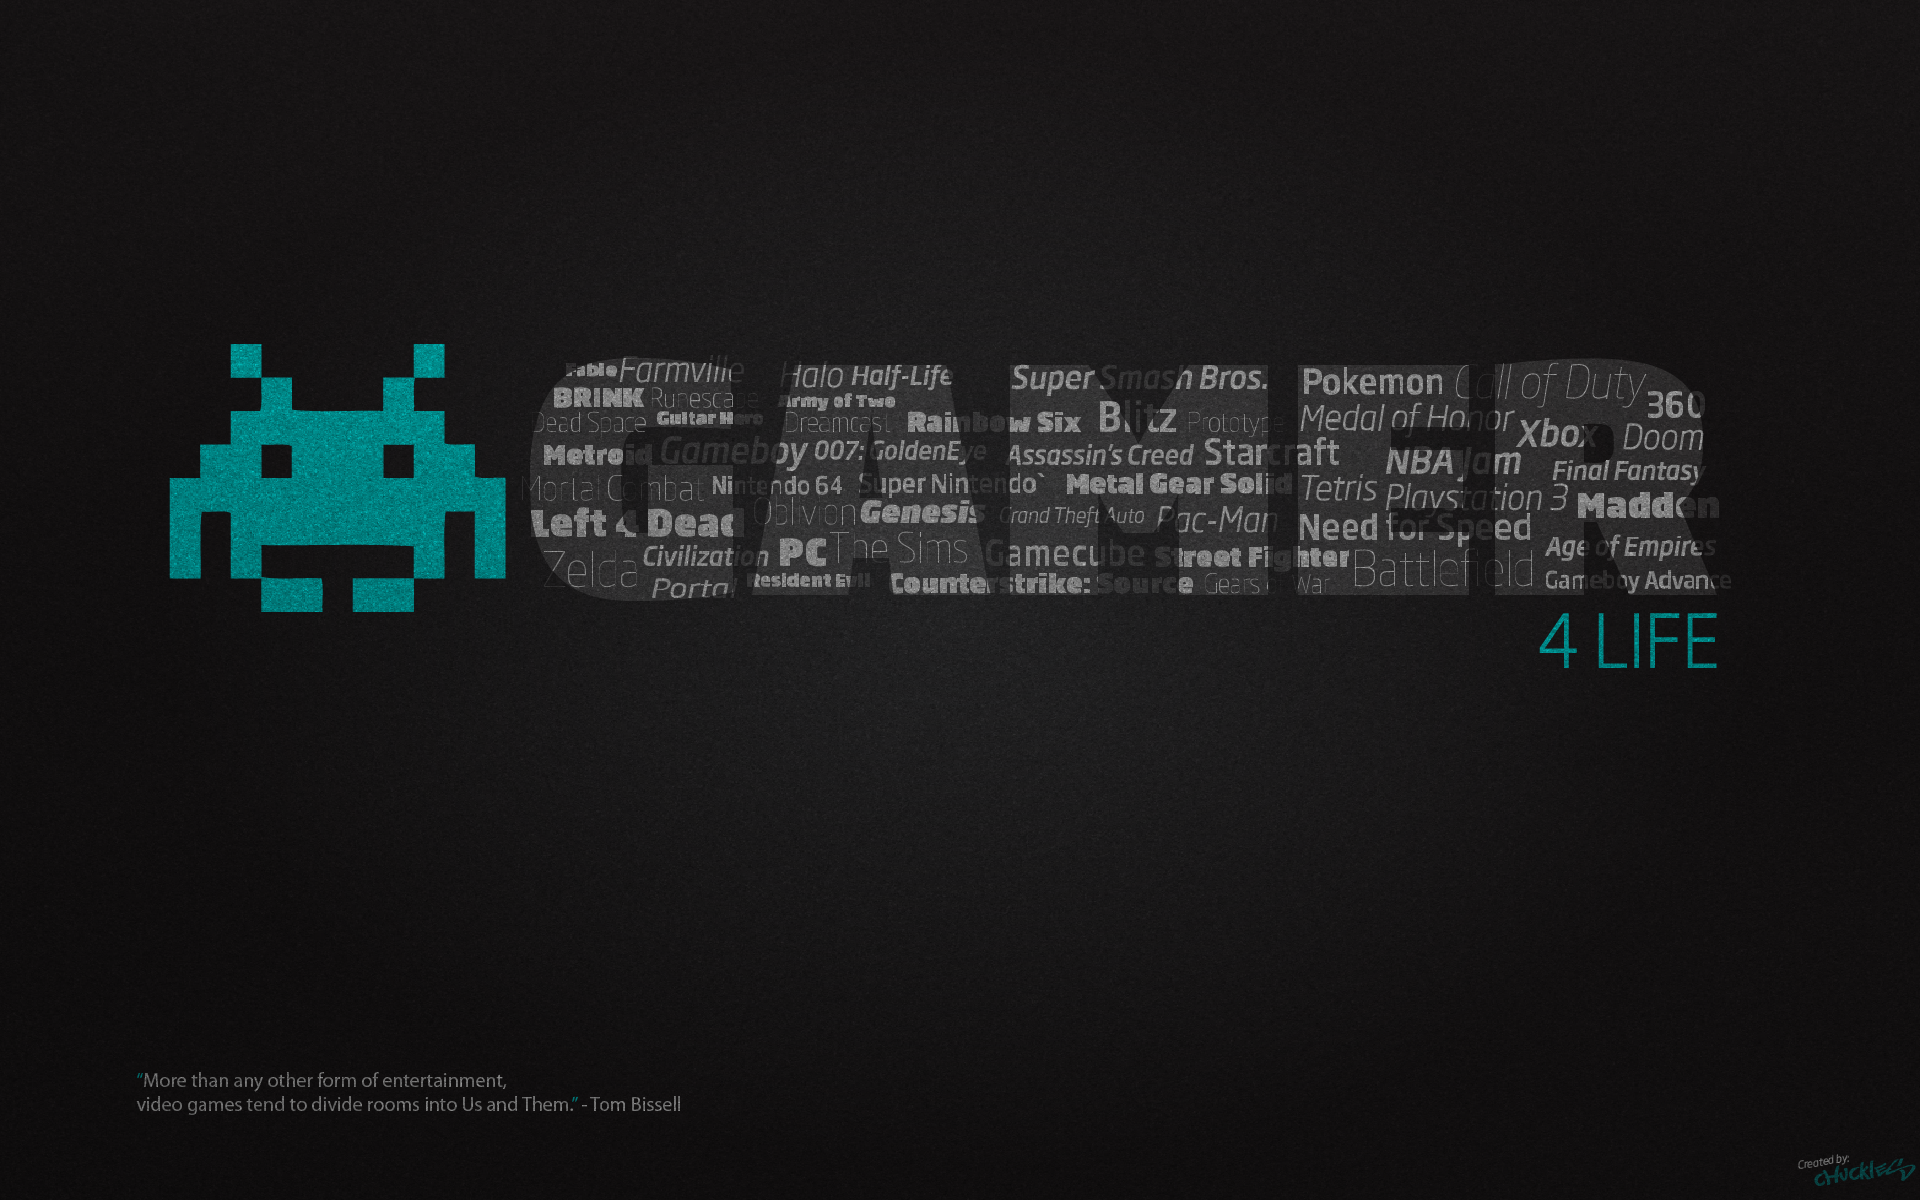 Gamer for Life Desktop Wallpaper 1920x1200 by ChucklesMedia on